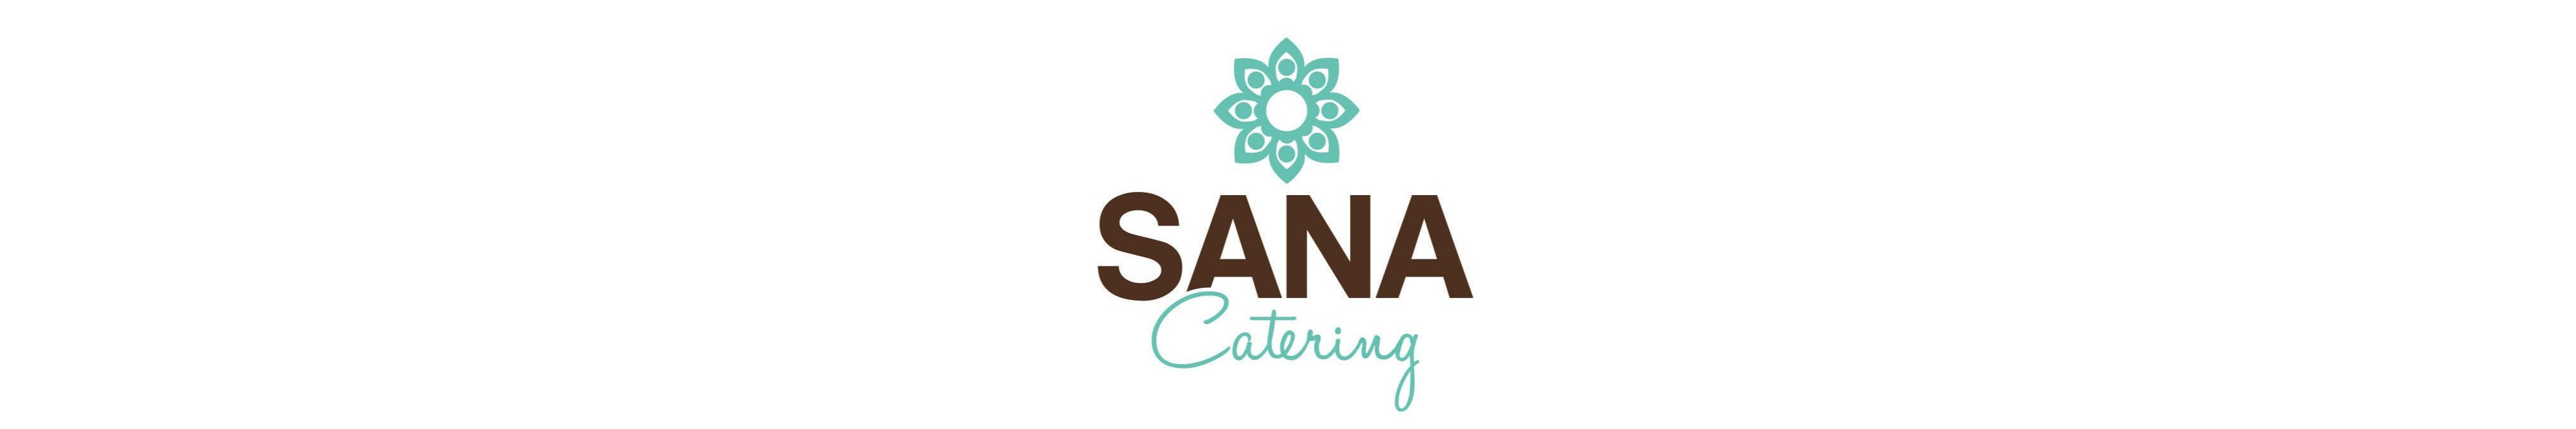 Sana Catering Marbella